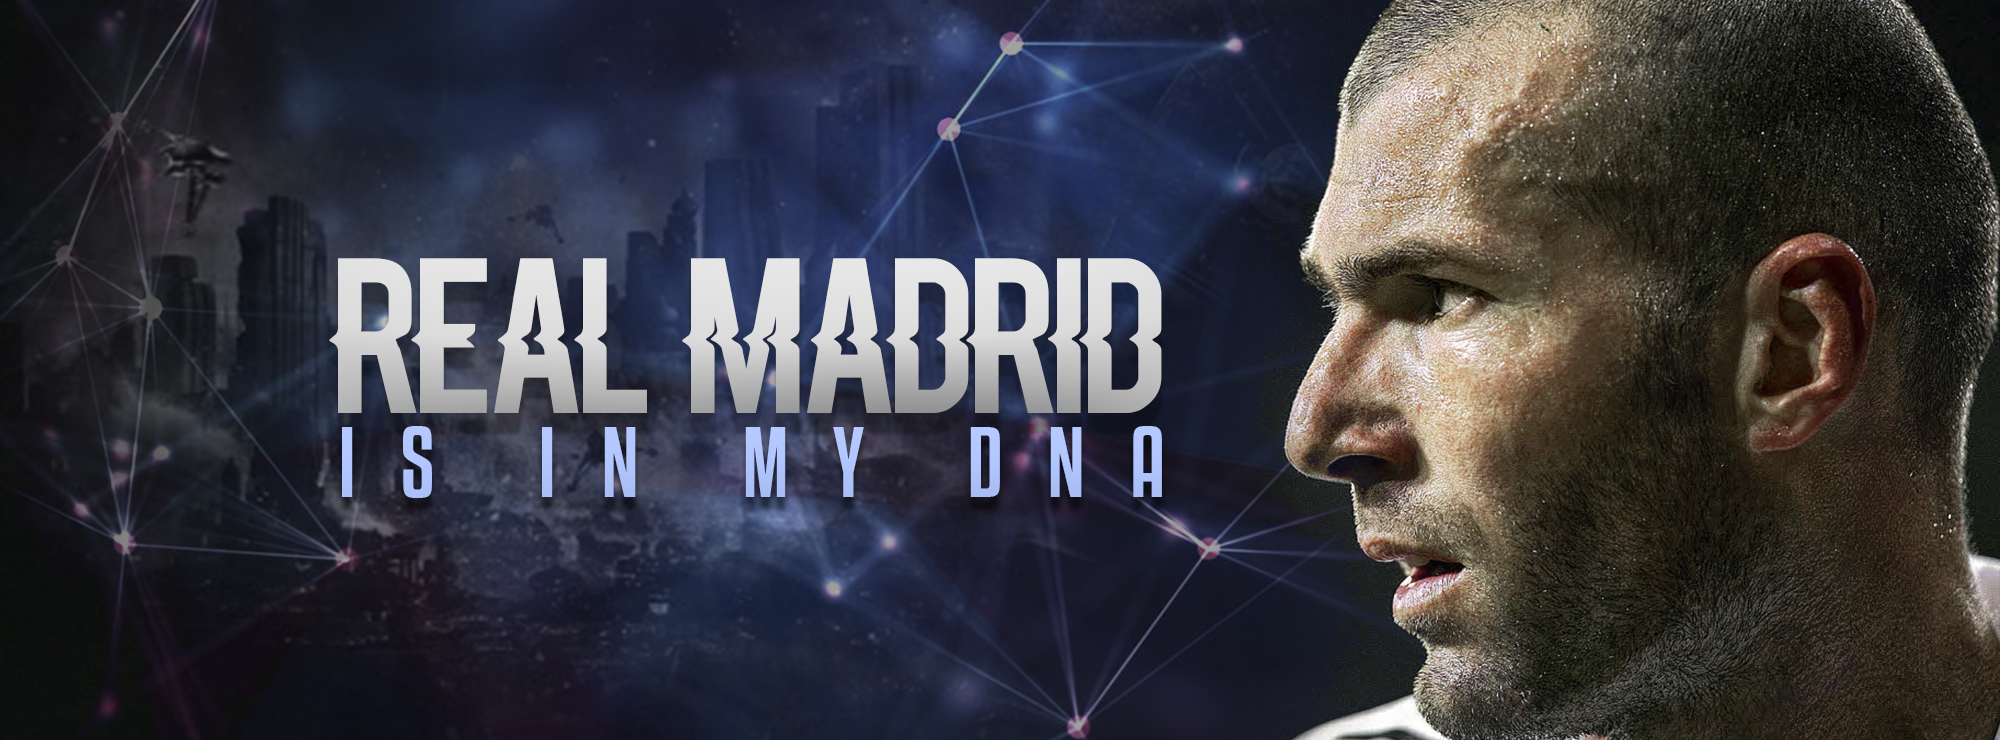 Real Madrid Zidane HD Facebook Cover By Kerimov23 On DeviantArt